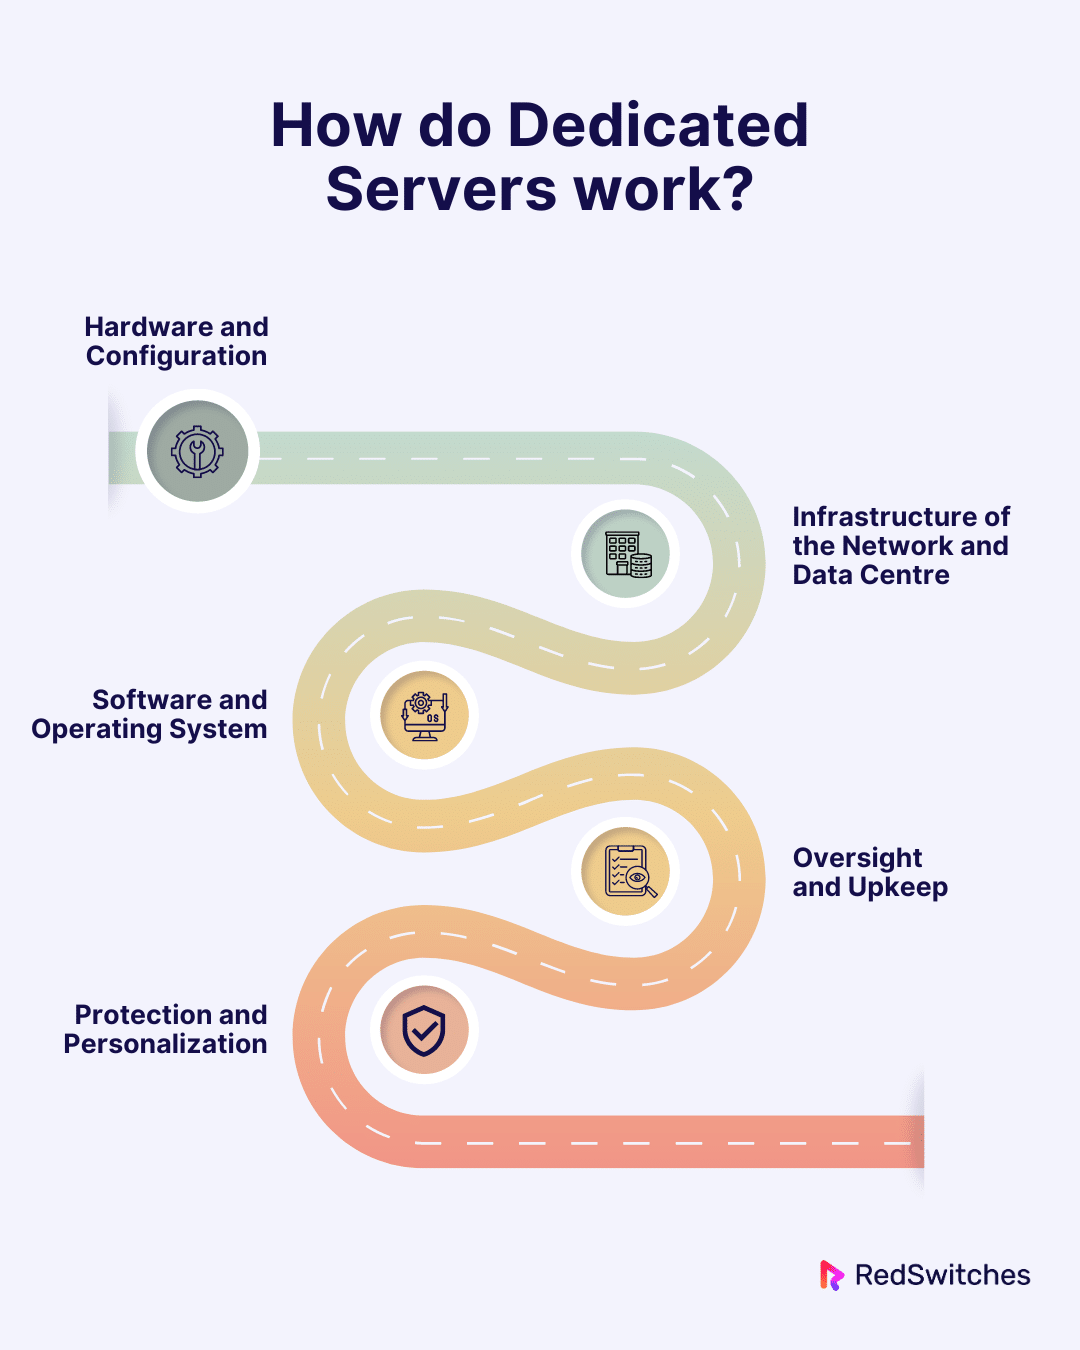 How do Dedicated Servers work